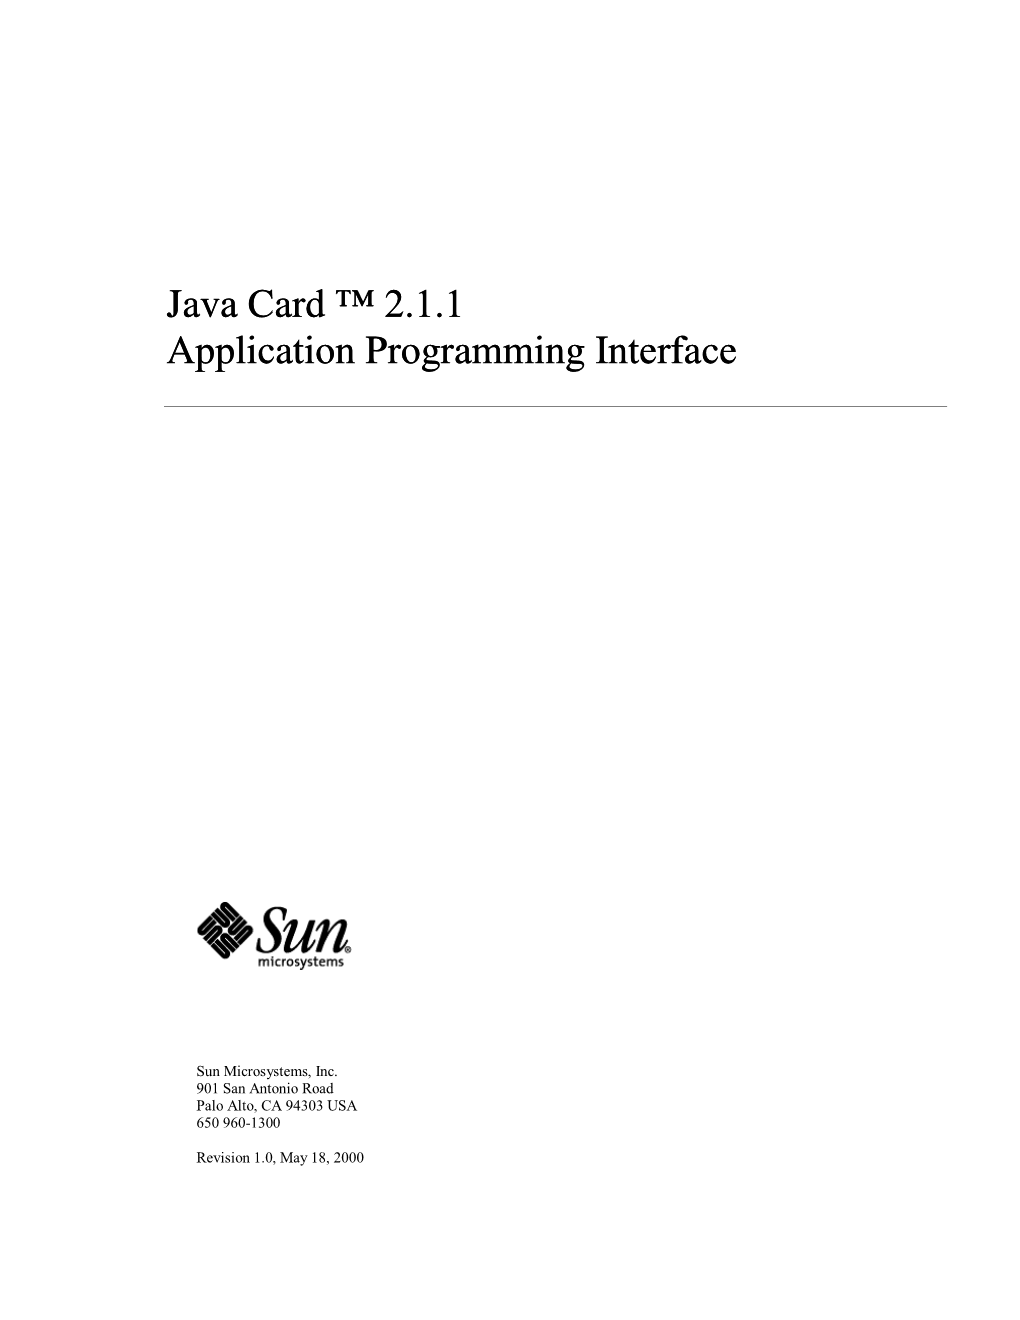 Java Card ™ 2.1.1 Application Programming Interface